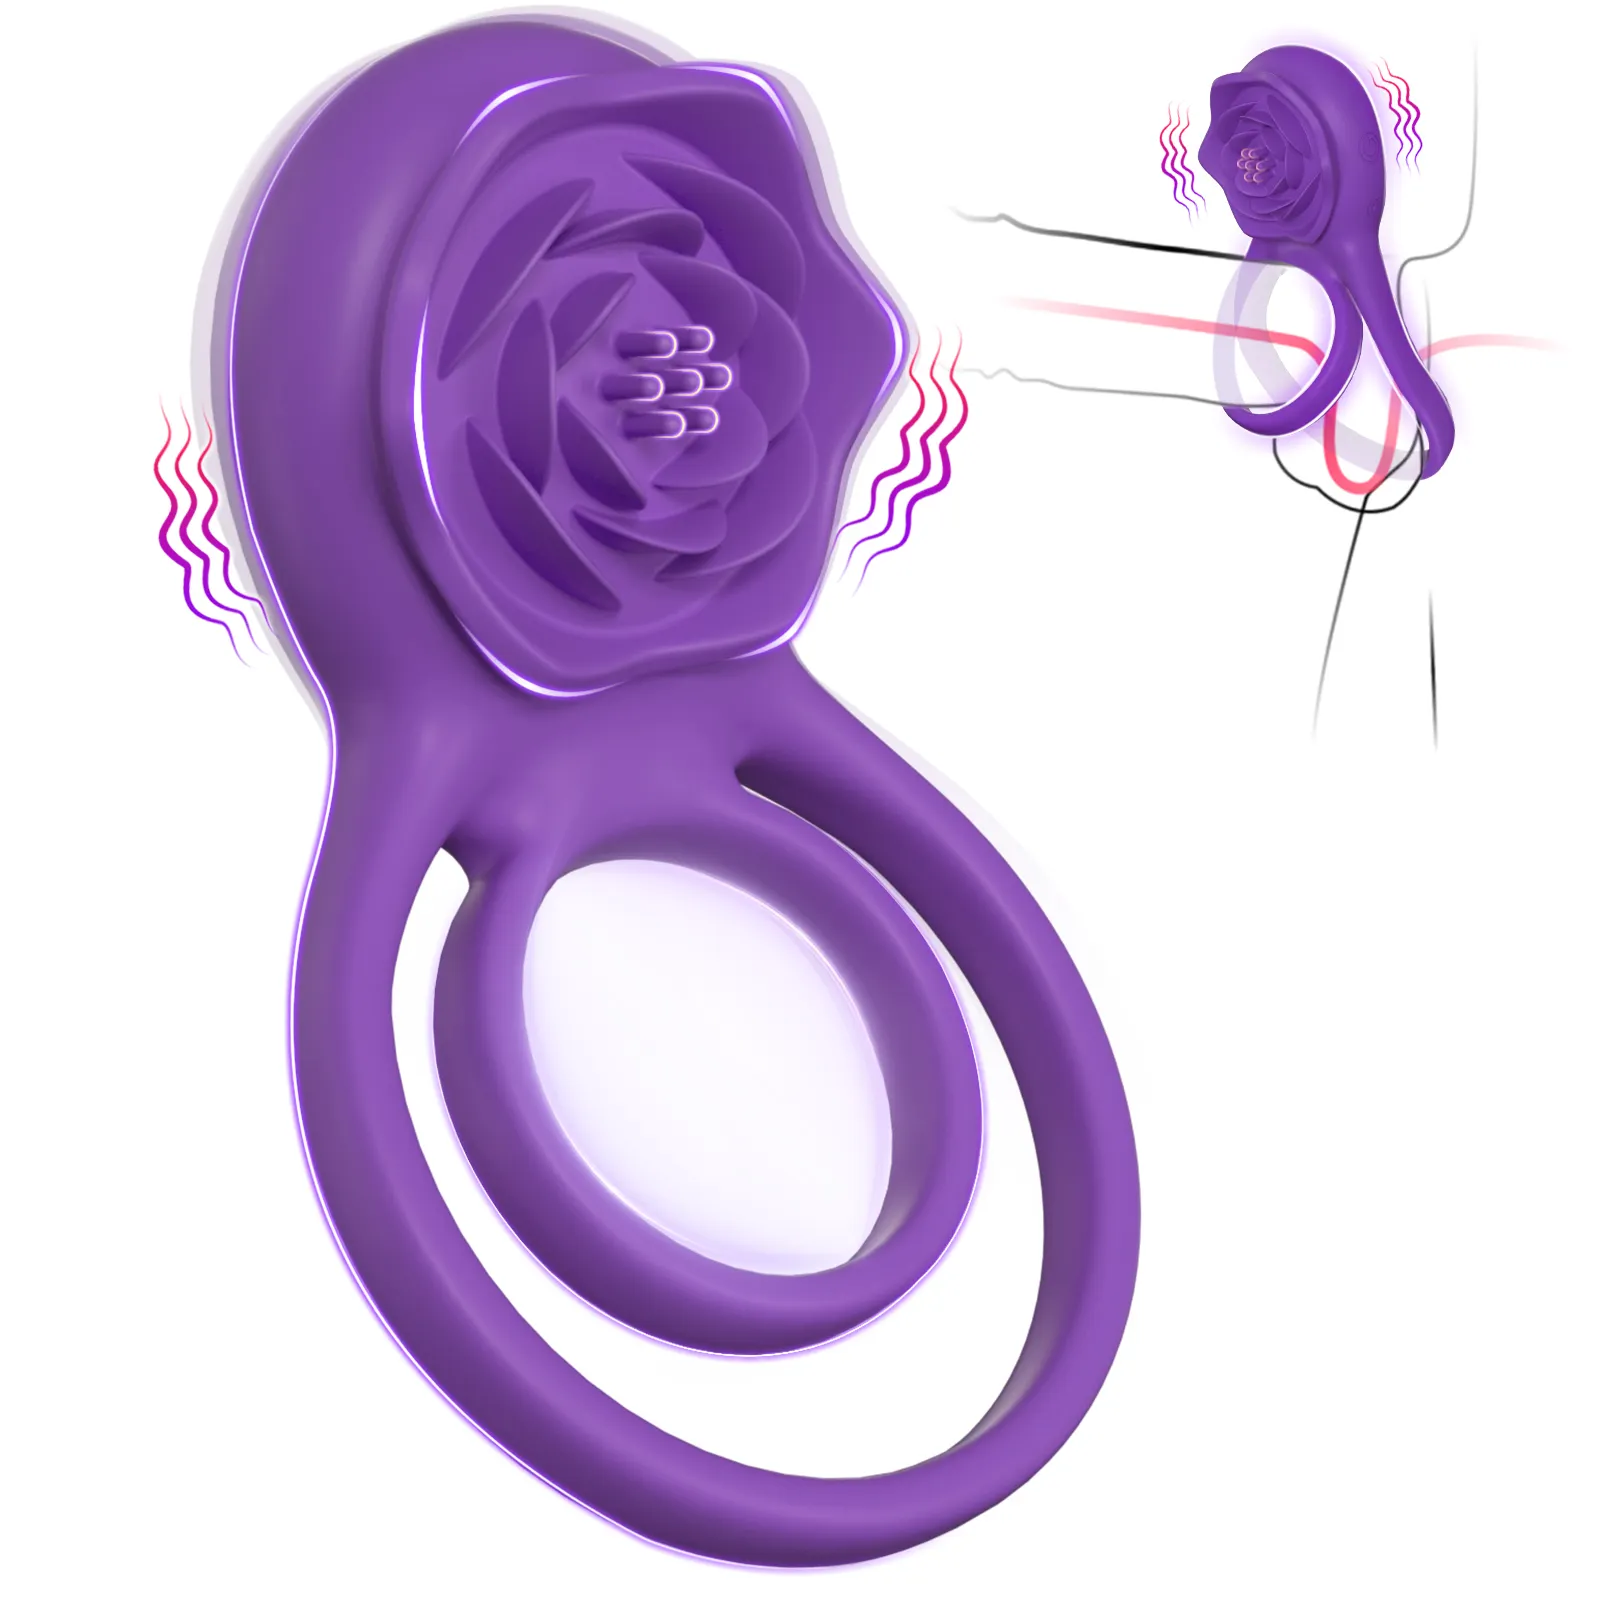 Neonislandsของเล่นทางเพศความสุขชายอวัยวะเพศชายแหวนนวดVibratorคู่ซิลิโคนVibrating CockแหวนRose Stimulator Clitoral